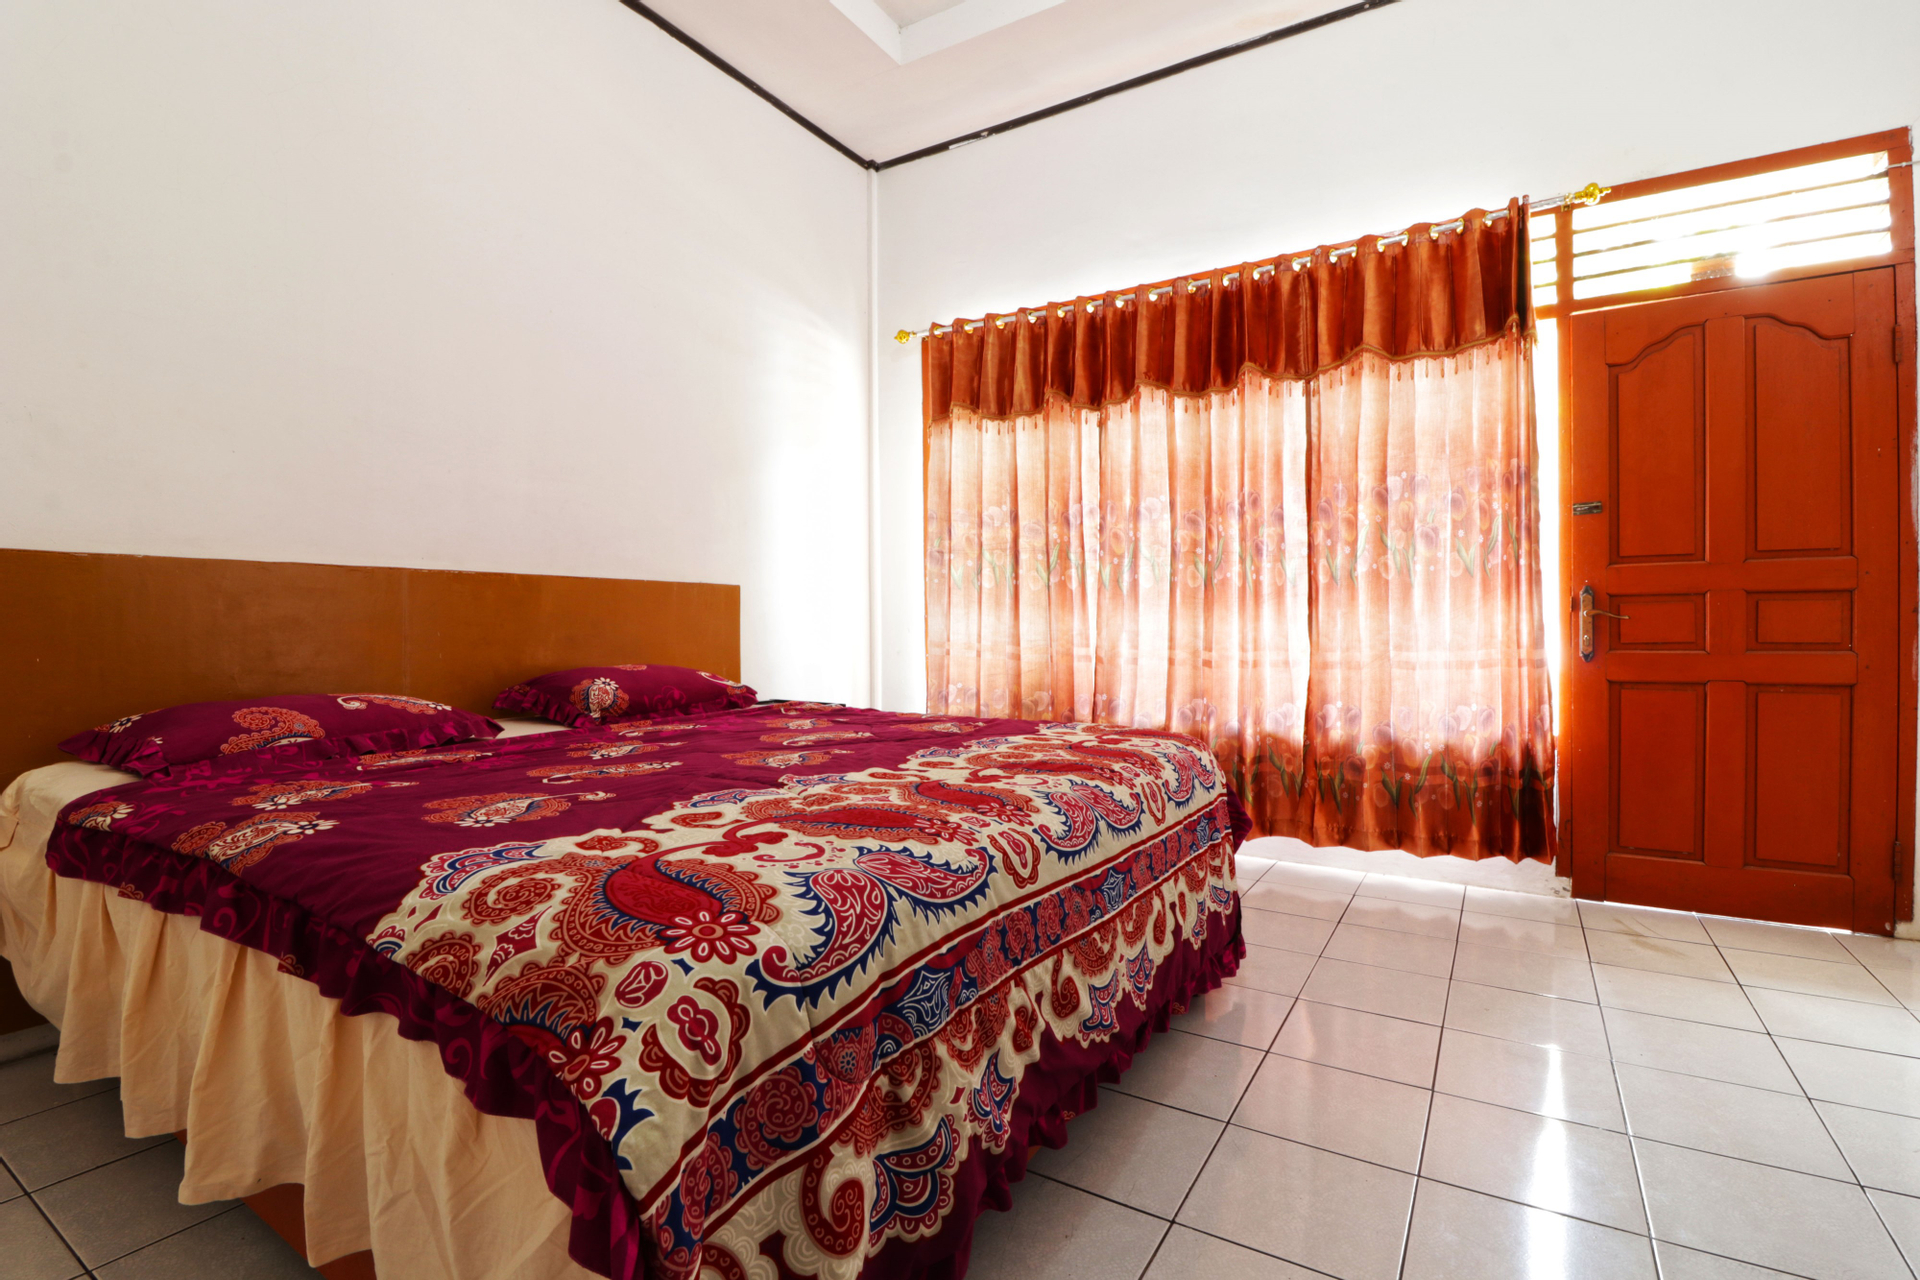 Bedroom 4, Hotel Sumber Pulo Mas, Samosir